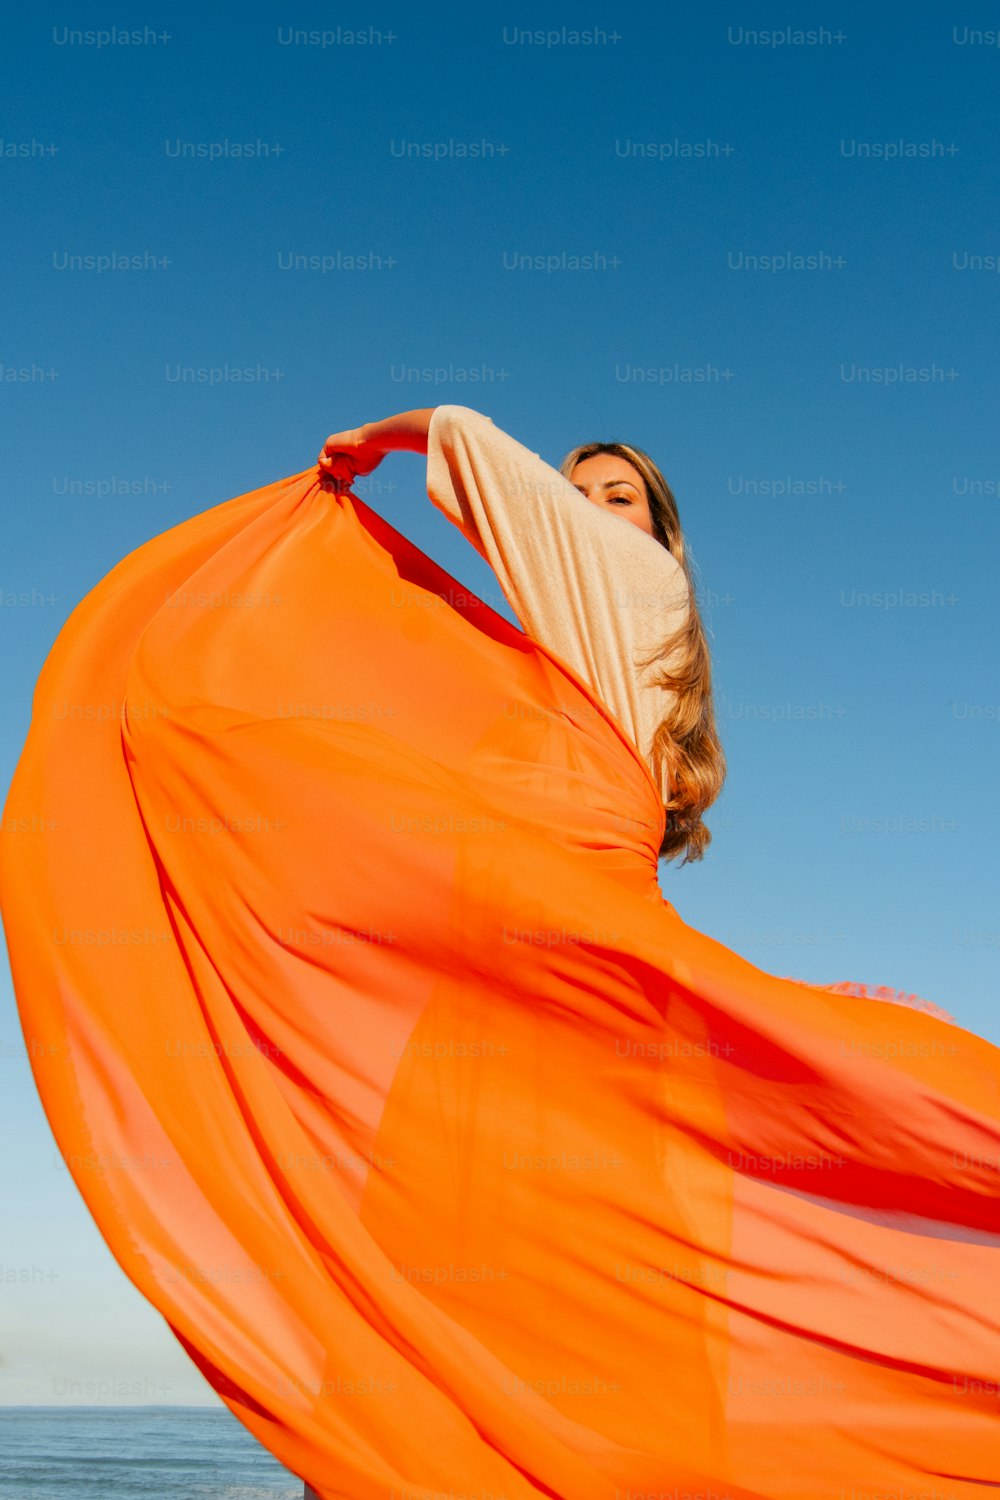 a woman in an orange dress on the beach